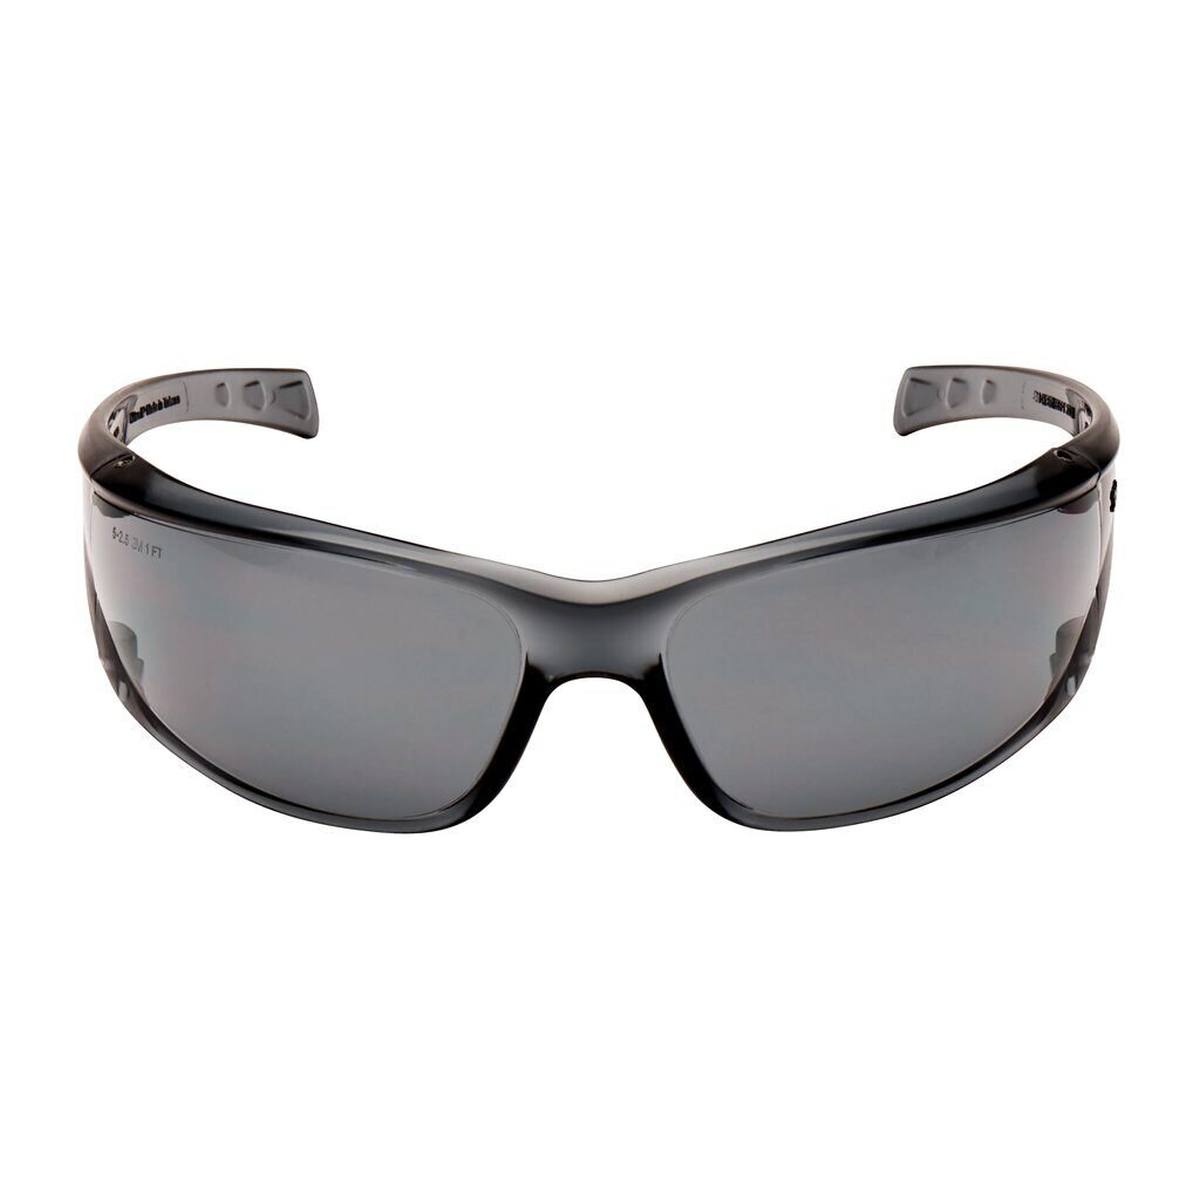 3M Safety goggles "Virtua" AP grey AP/AS/UV